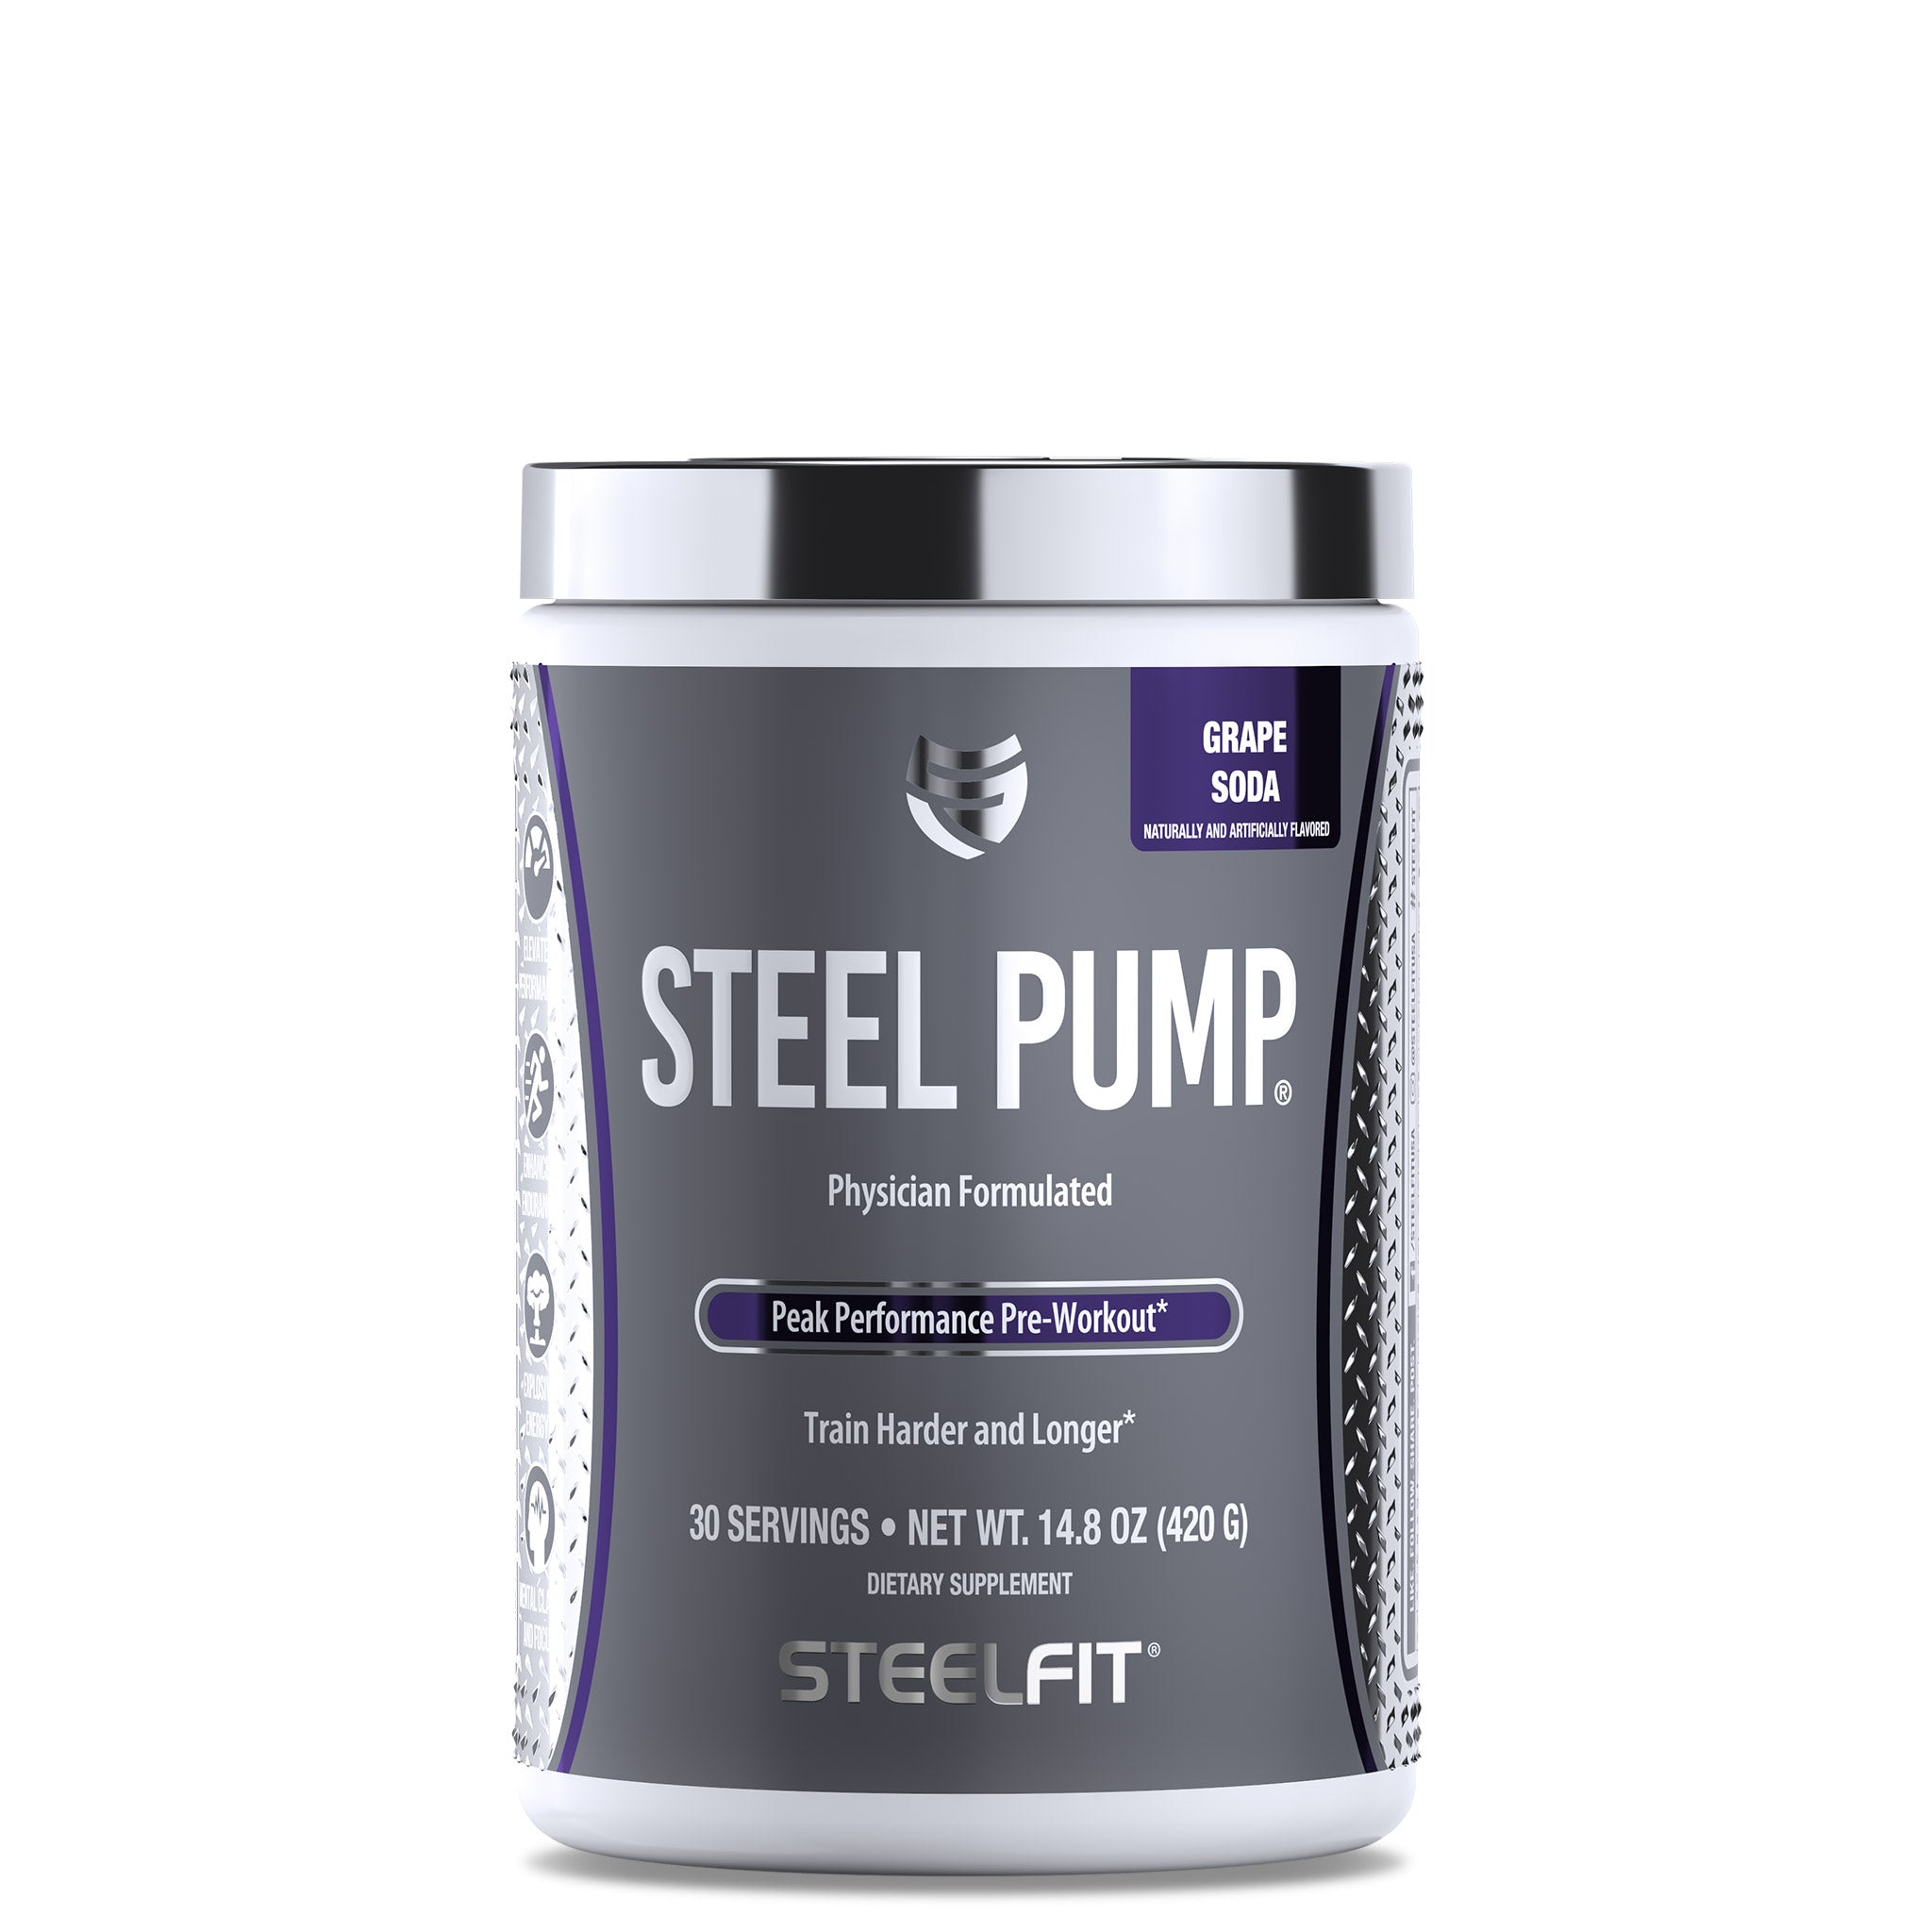 Grape Soda pump pre workout supplement supplement by SteelFit